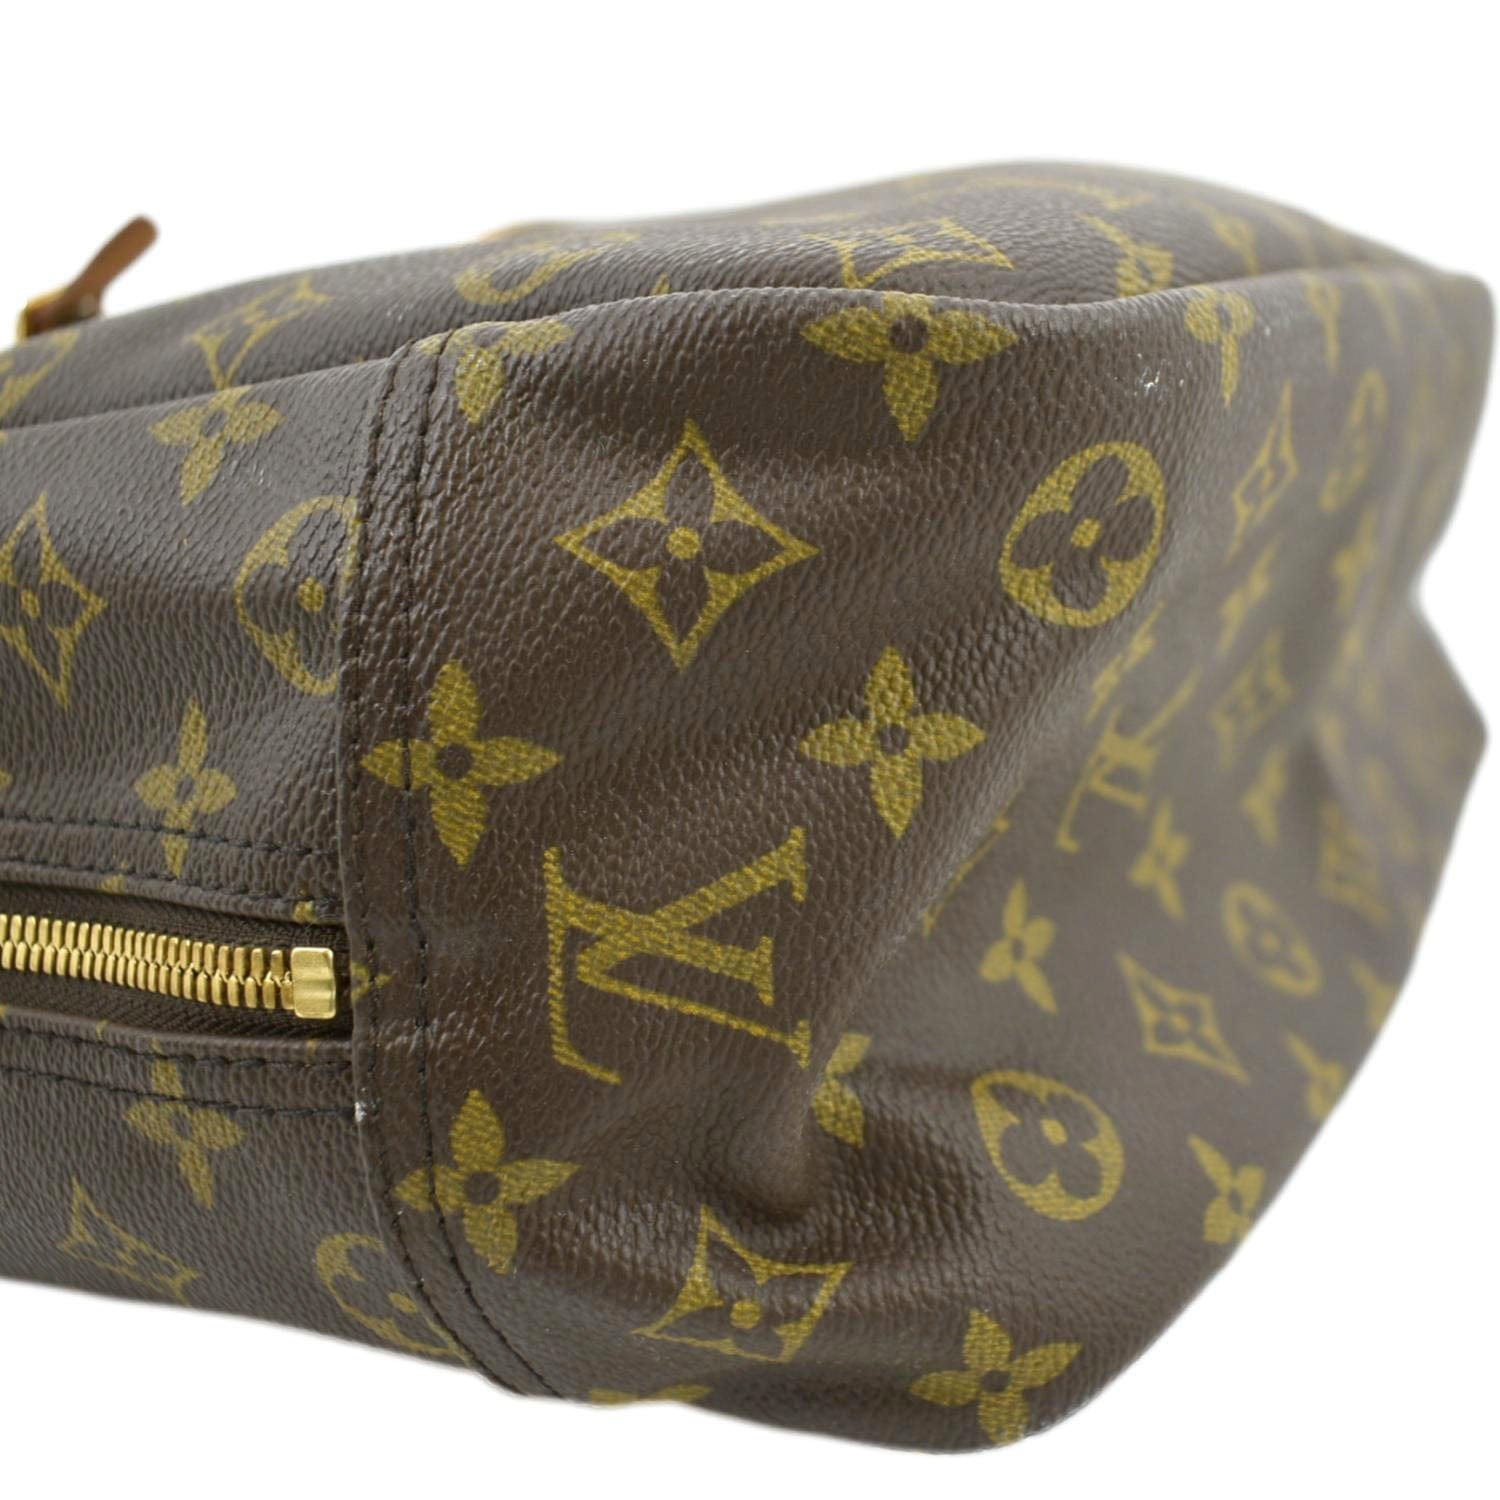 Louis Vuitton, Bags, Louis Vuitton Bowling Bag